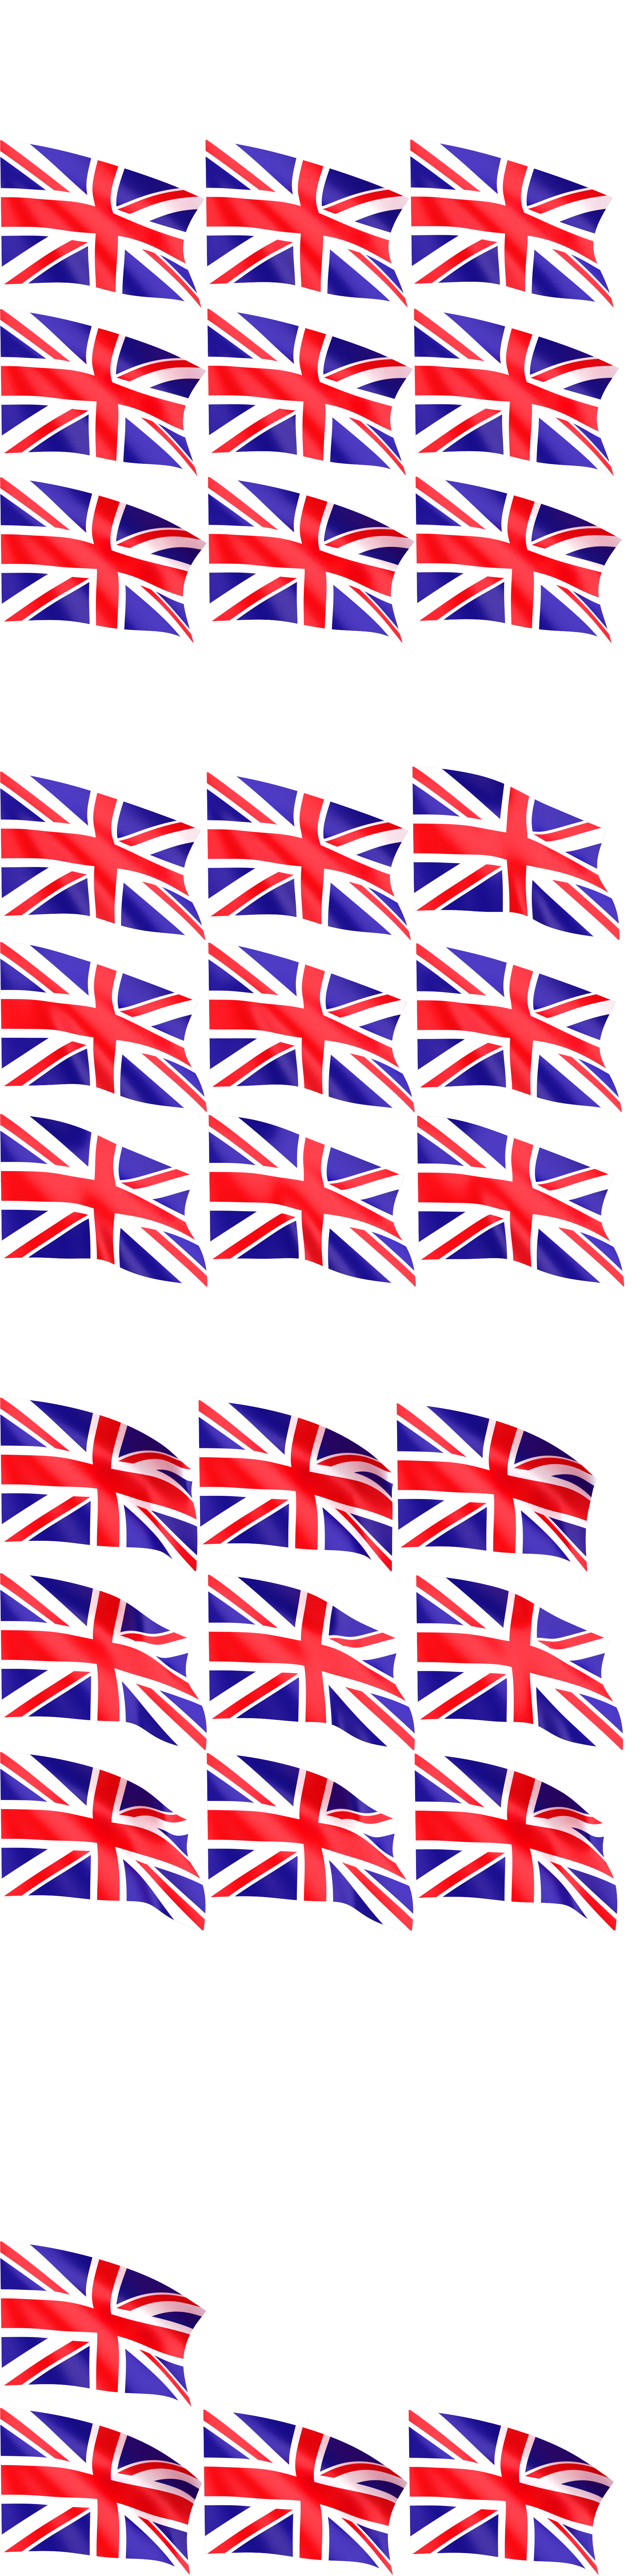 KID PIX 5: The STEAM Edition - United Kingdom Flag